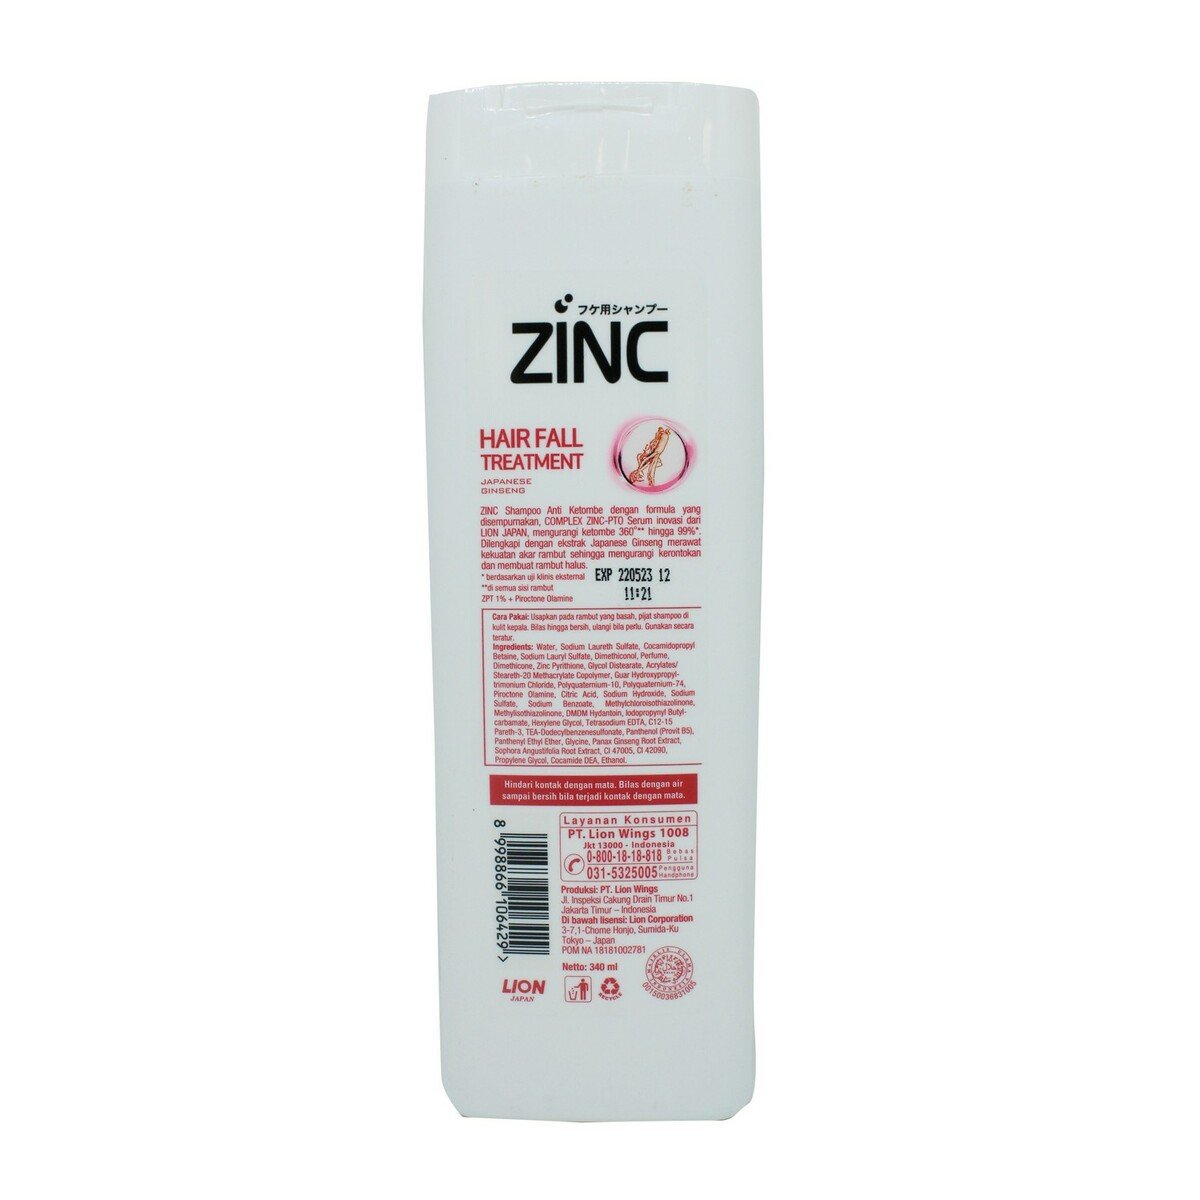 Zinc Shampo Hairfoil Treatment Botol 340ml